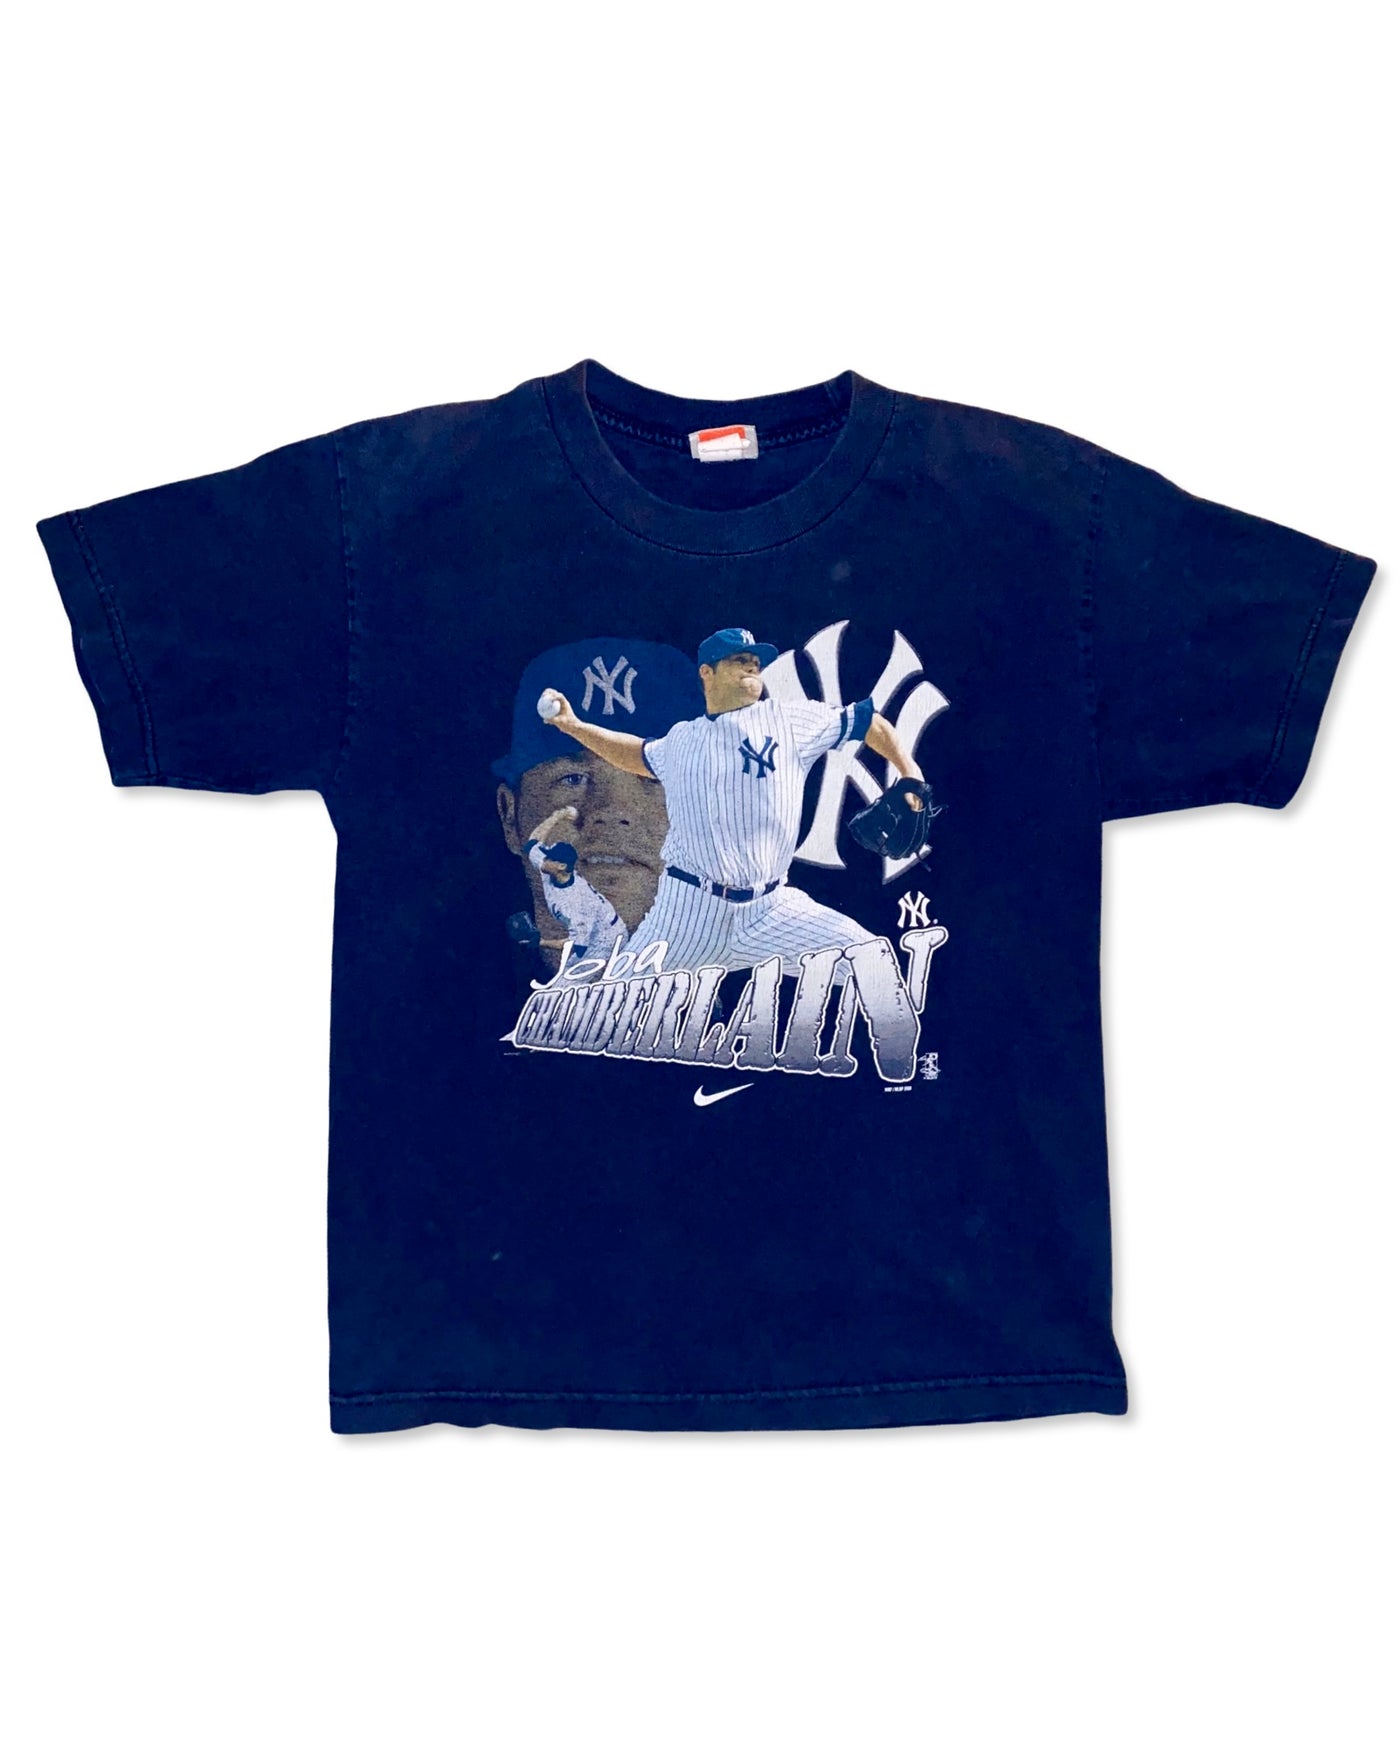 2006 Joba Chamberlain Yankees T-Shirt